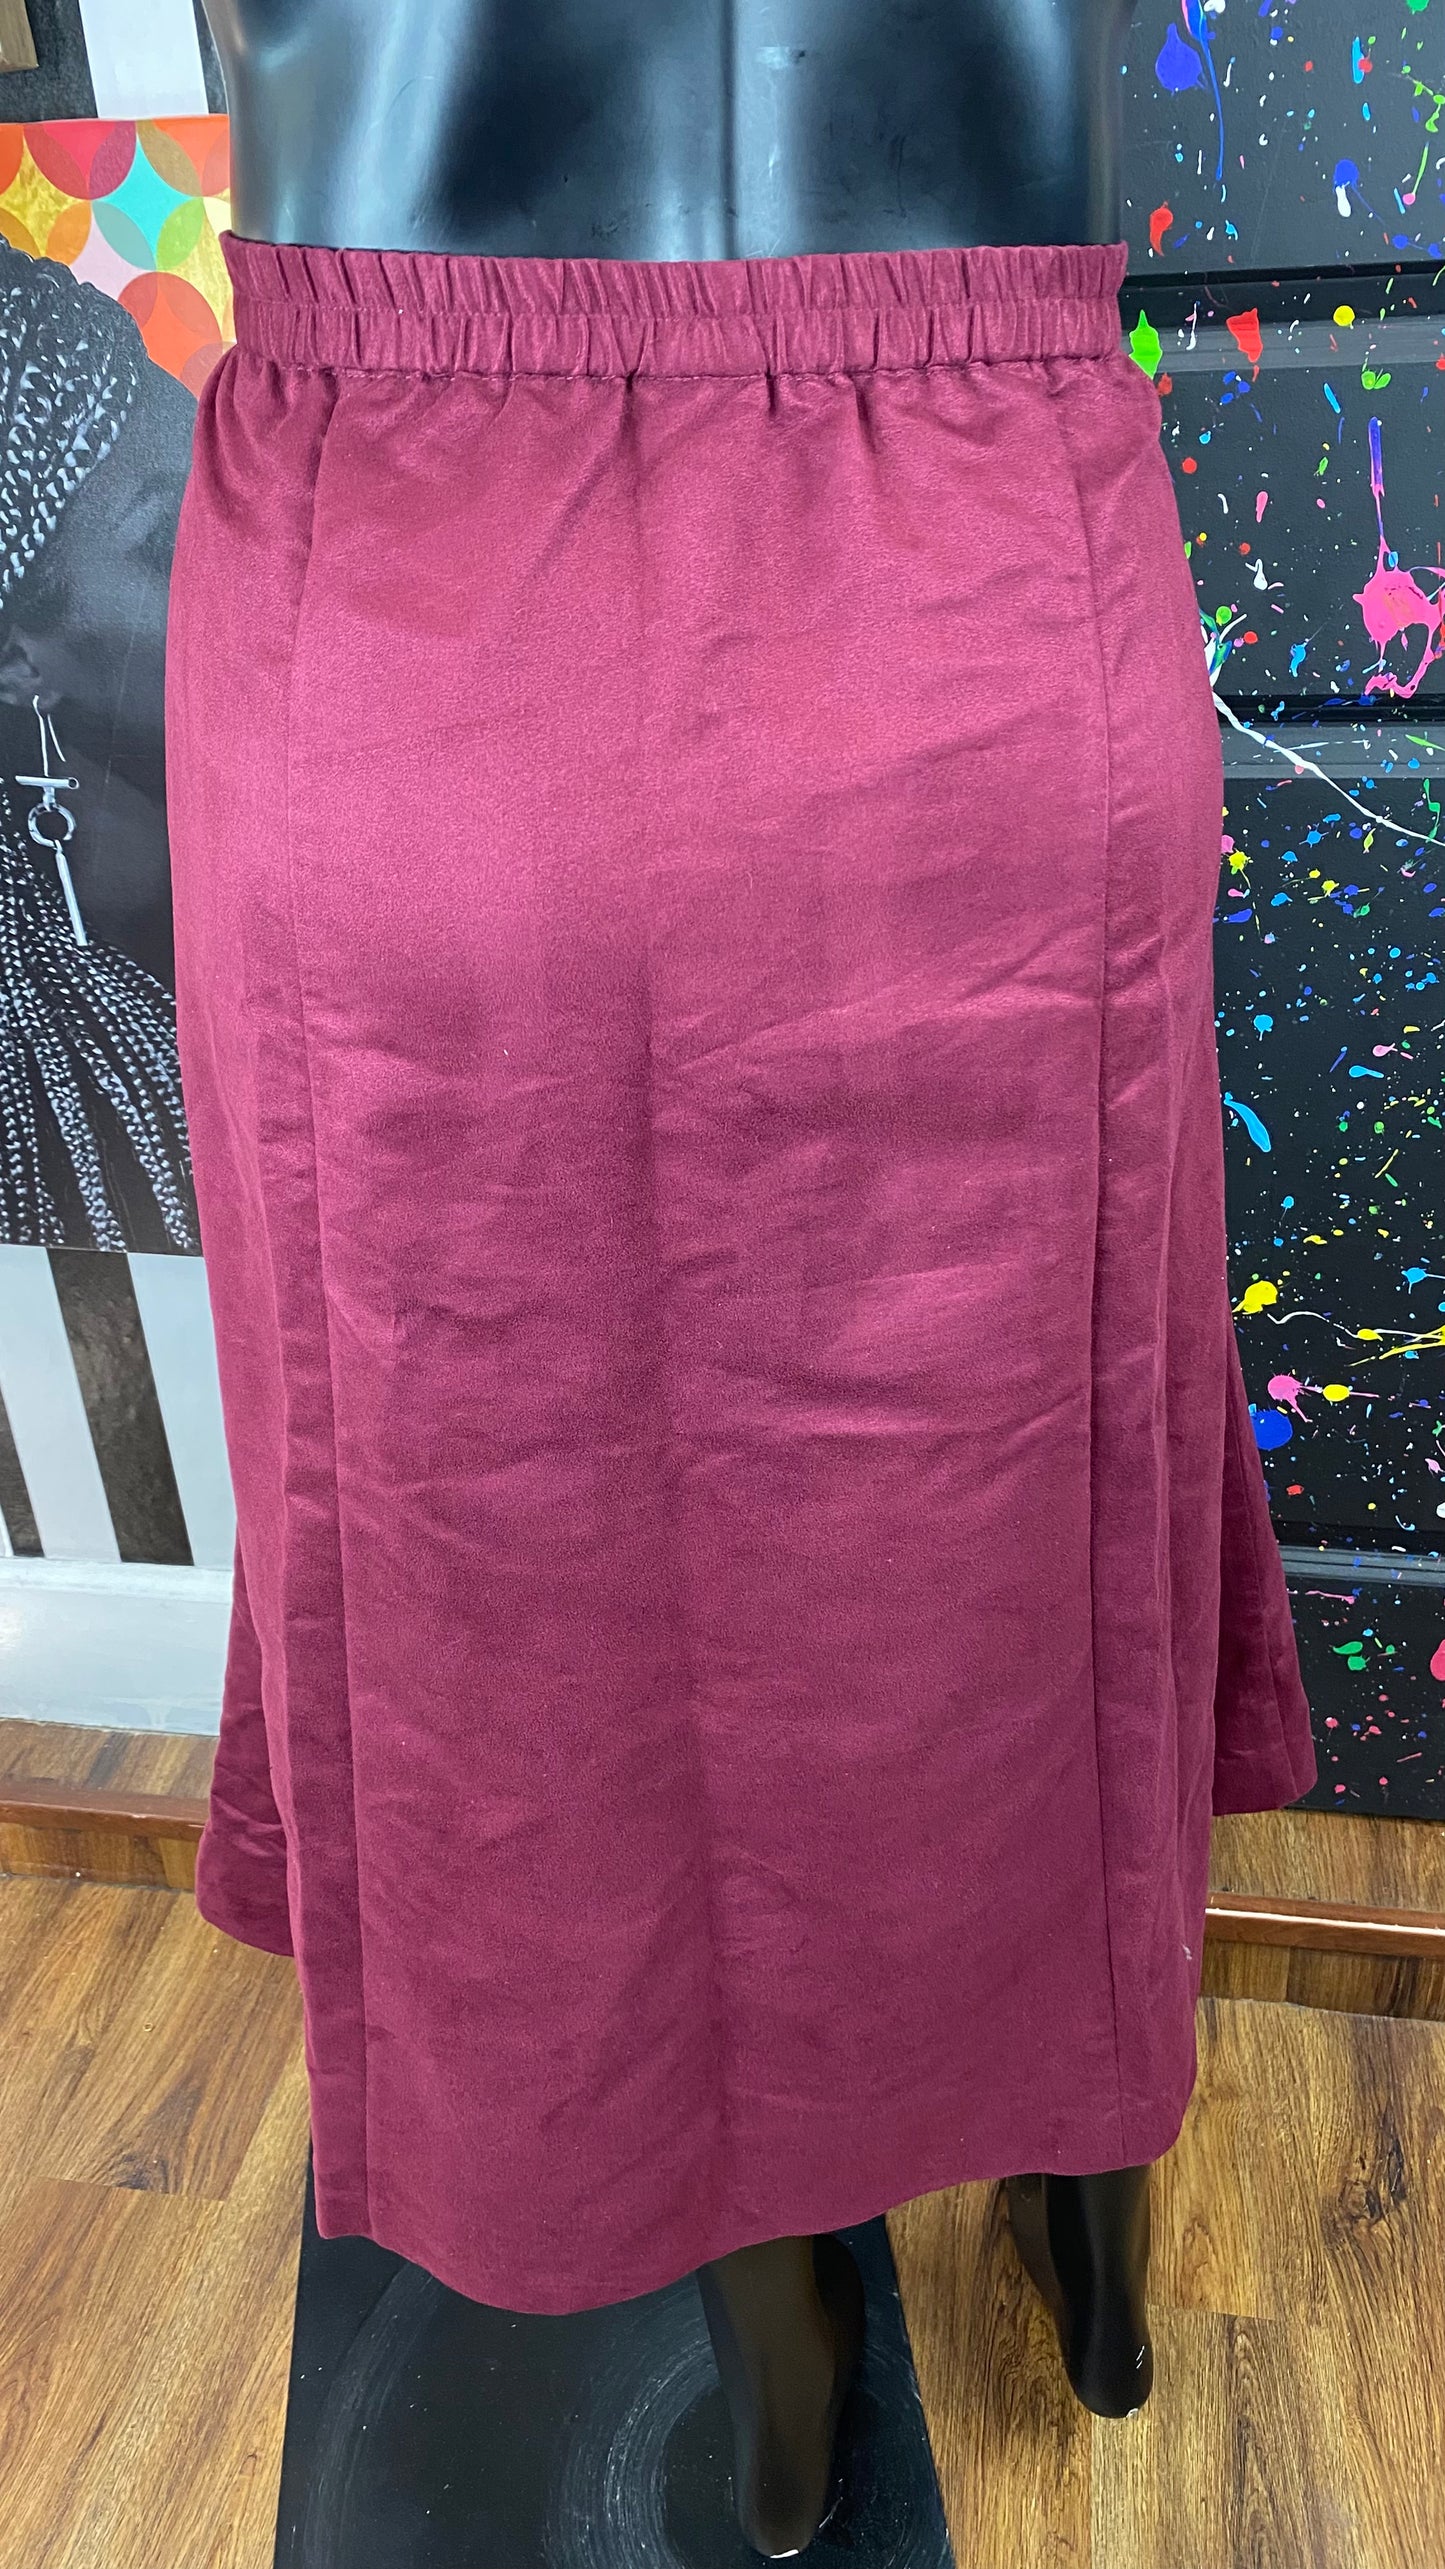 Vintage Bedford Fair Skirt